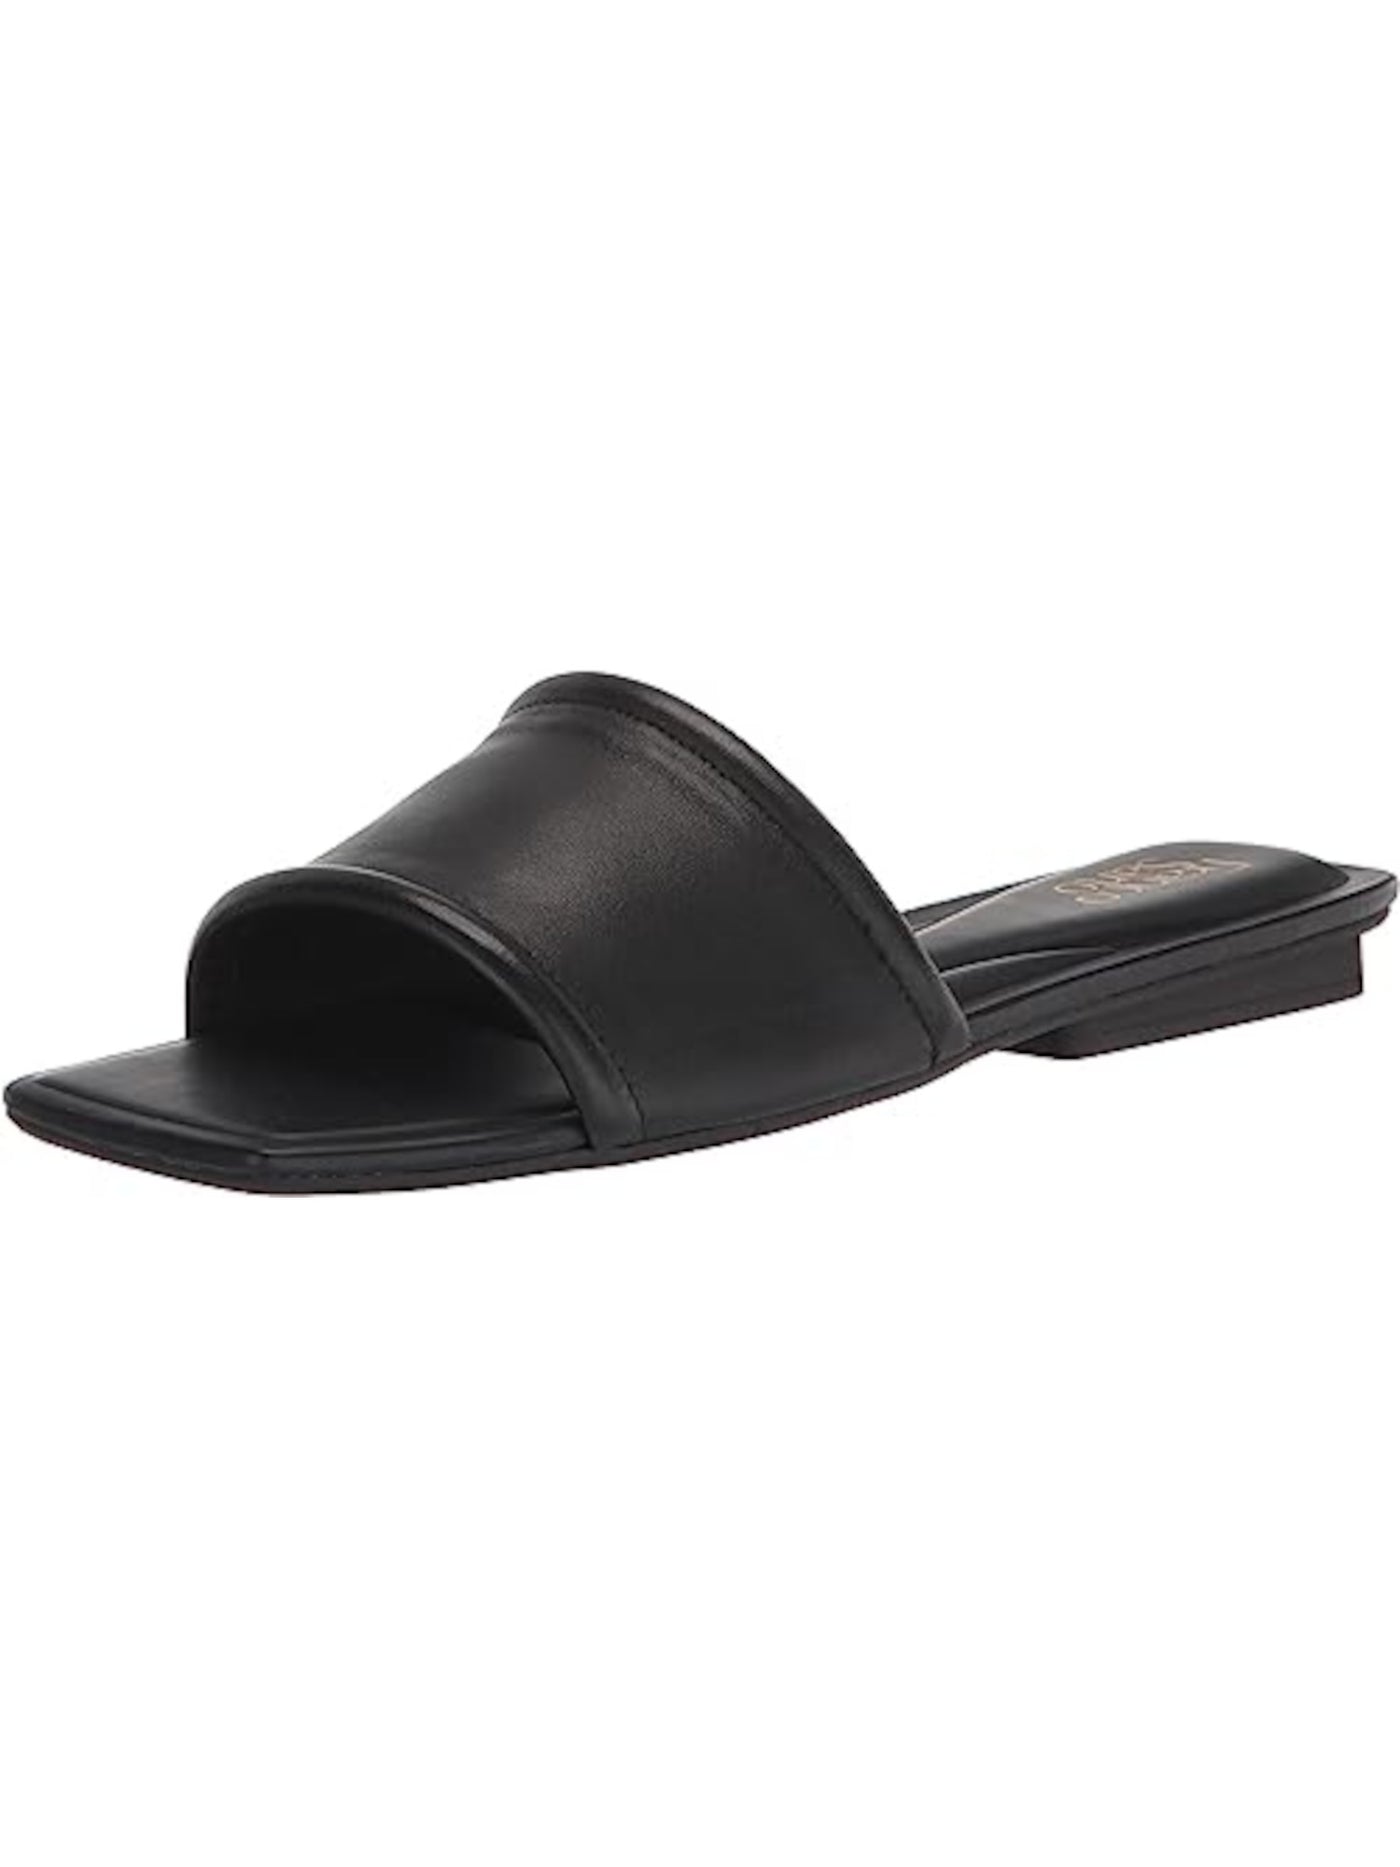 FRANCO SARTO Womens Black Cushioned Caven Square Toe Slip On Leather Slide Sandals Shoes 6 M